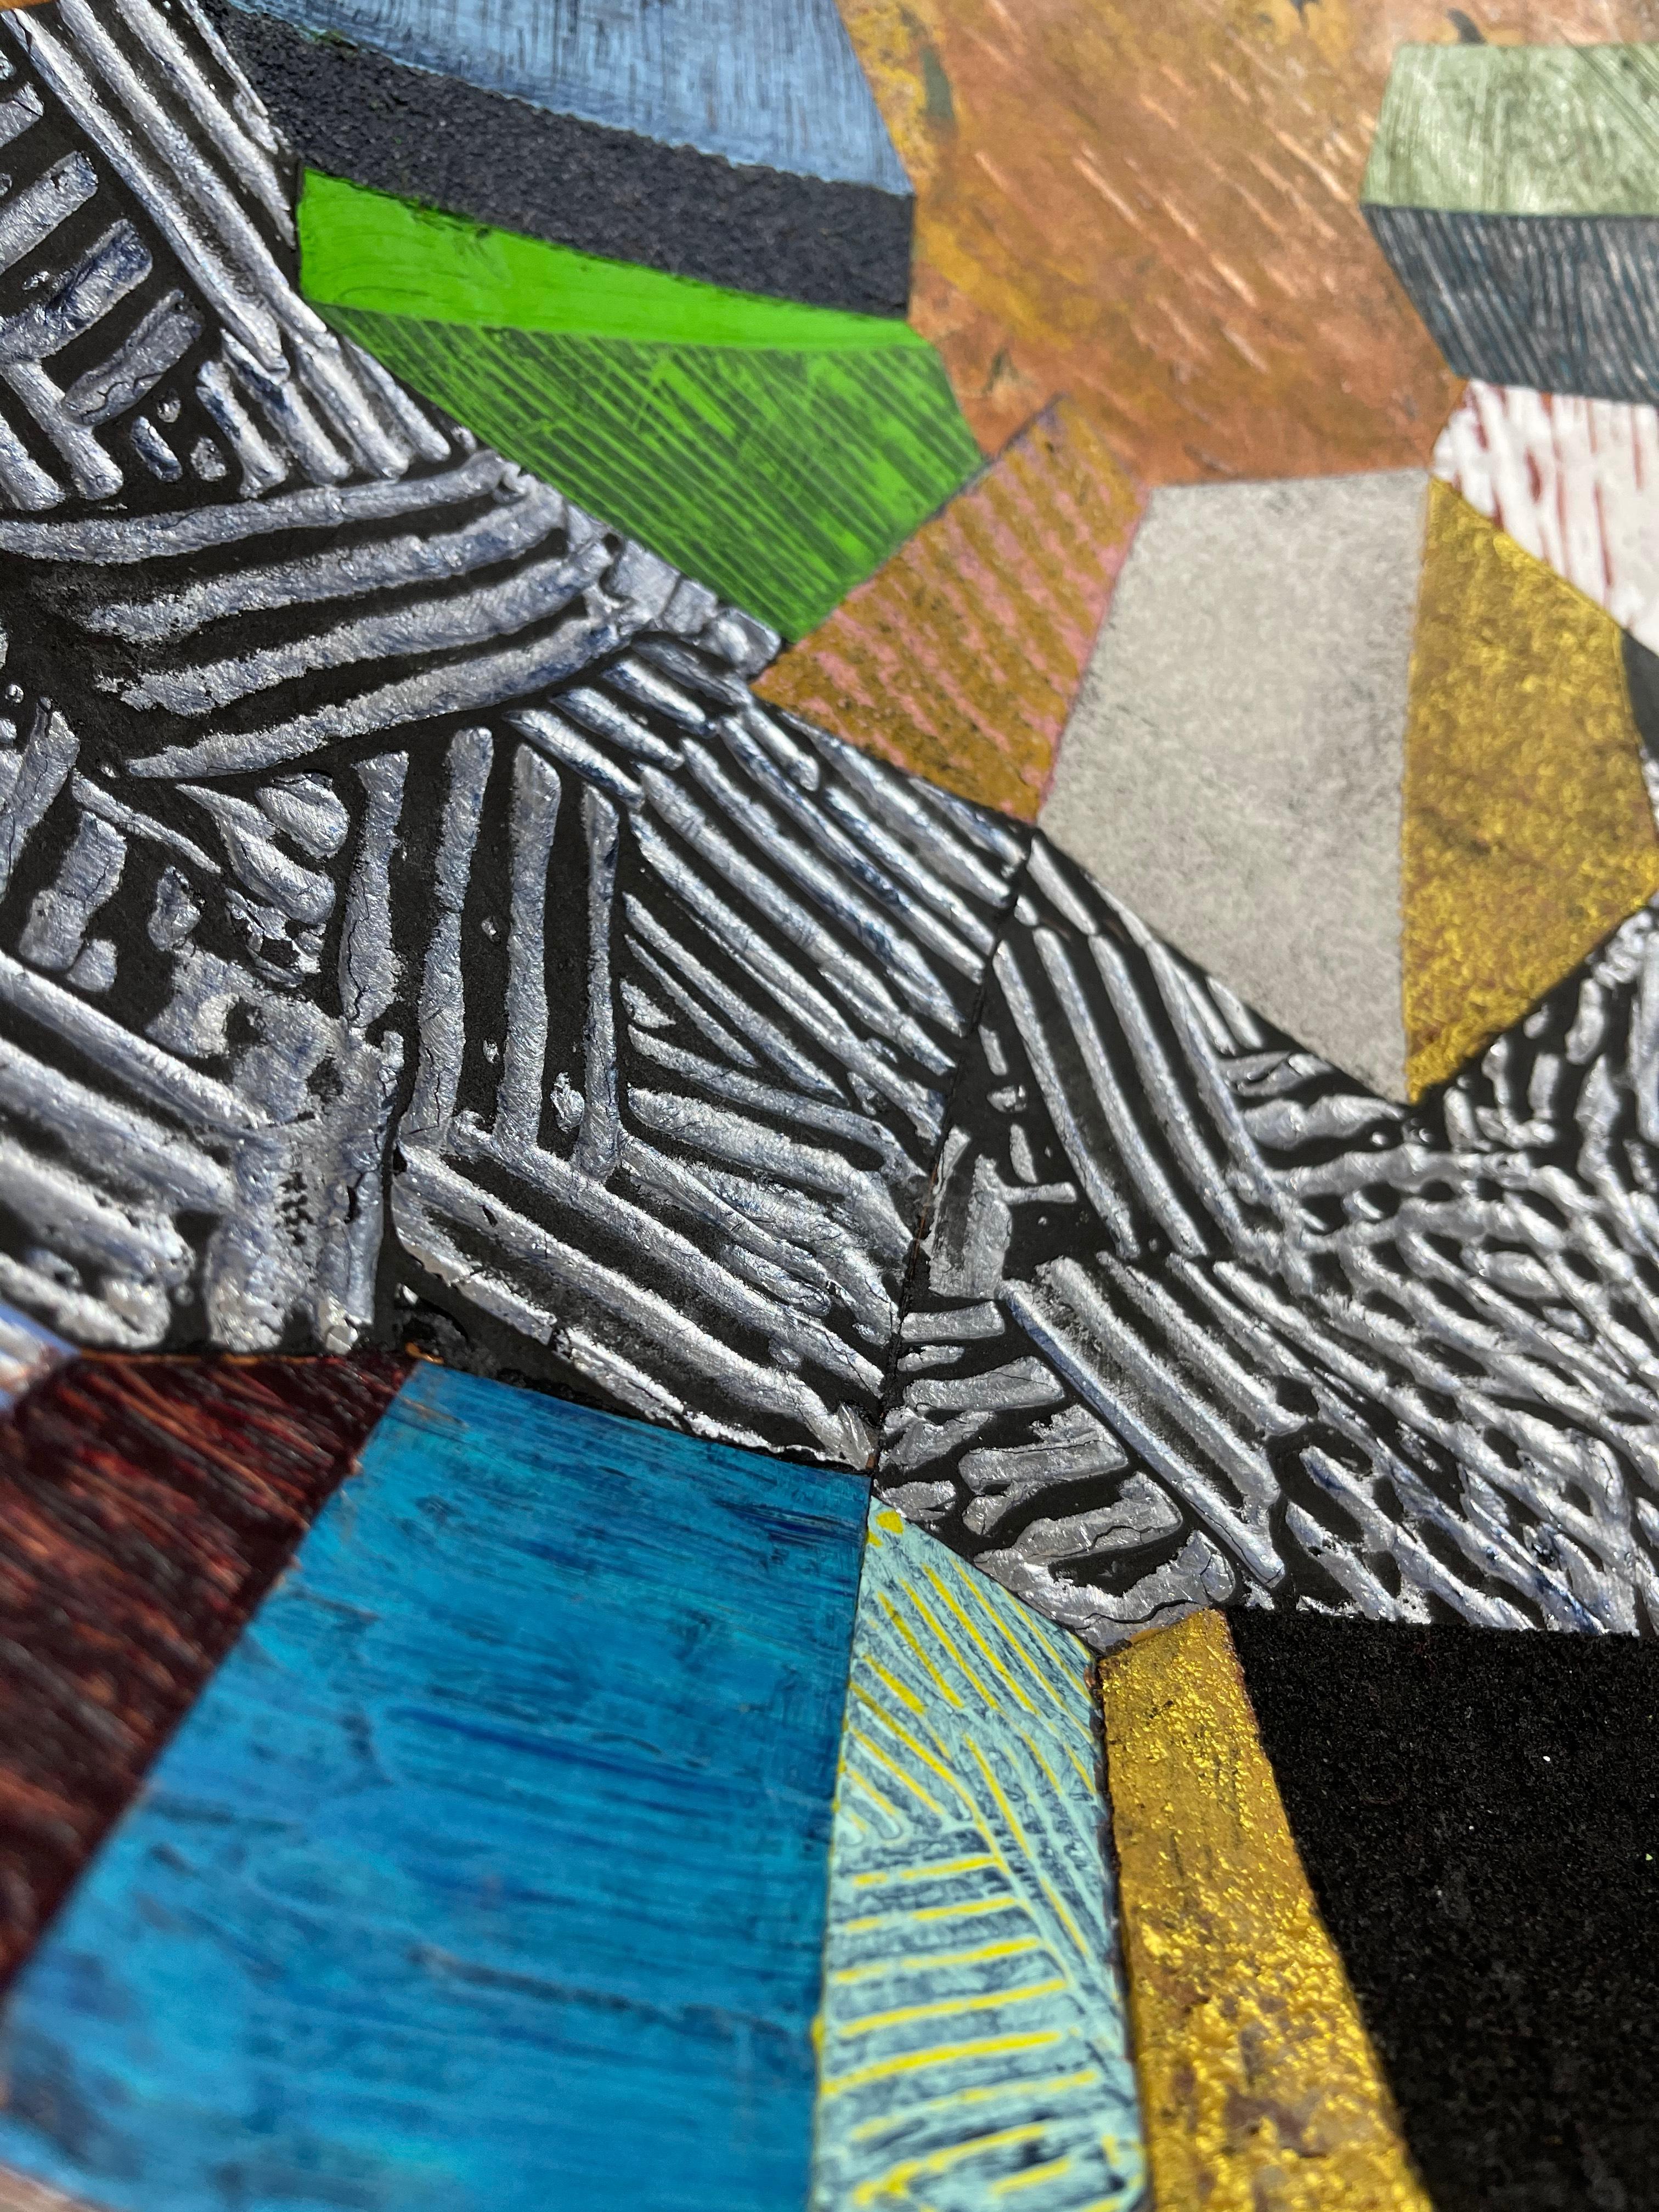 Vessel #4, multicolored mixed media sculptural piece, textured, 22